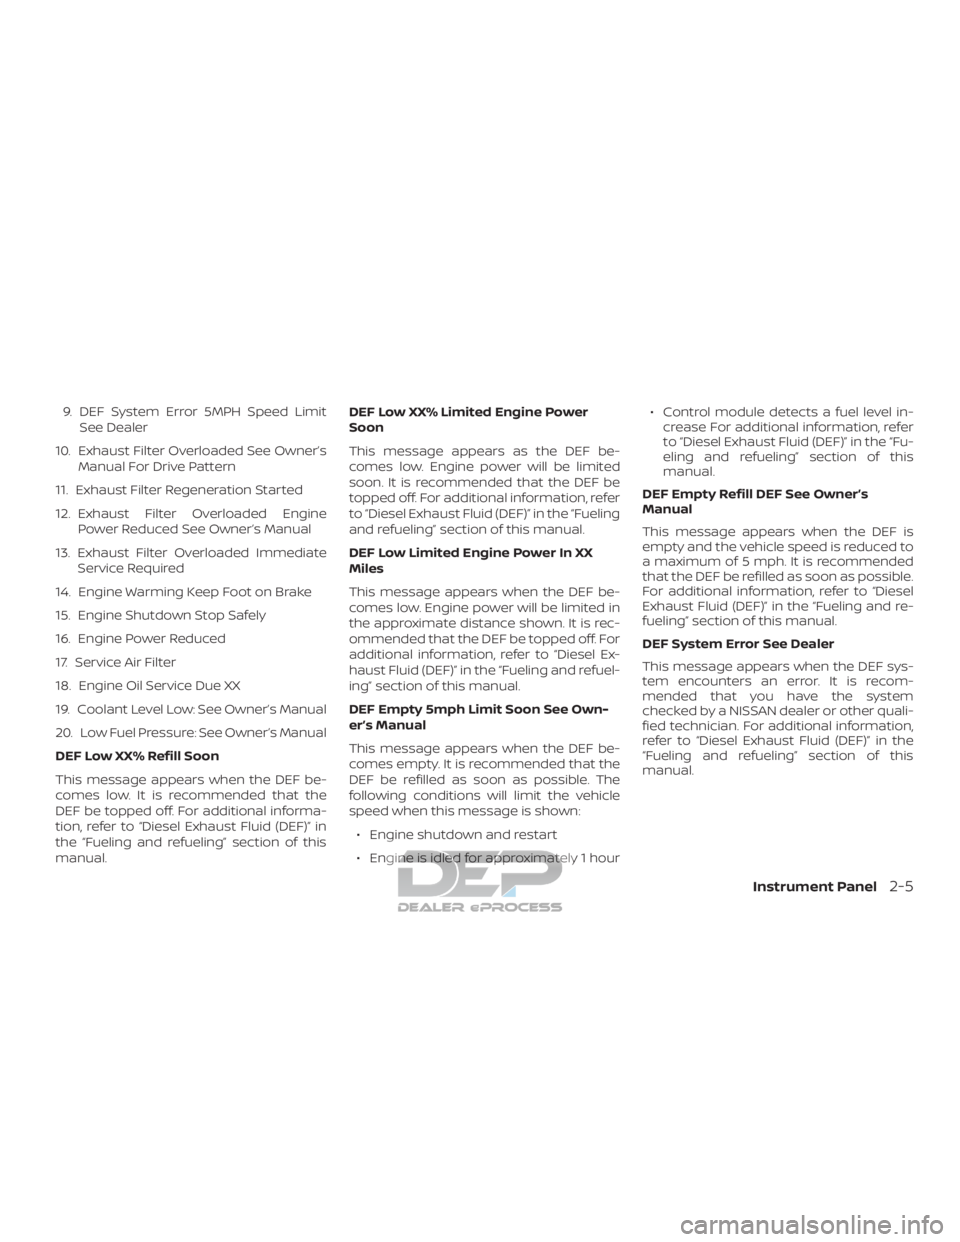 NISSAN TITAN 2019  Owner´s Manual 9. DEF System Error 5MPH Speed LimitSee Dealer
10. Exhaust Filter Overloaded See Owner’s Manual For Drive Pattern
11. Exhaust Filter Regeneration Started
12. Exhaust Filter Overloaded Engine Power R